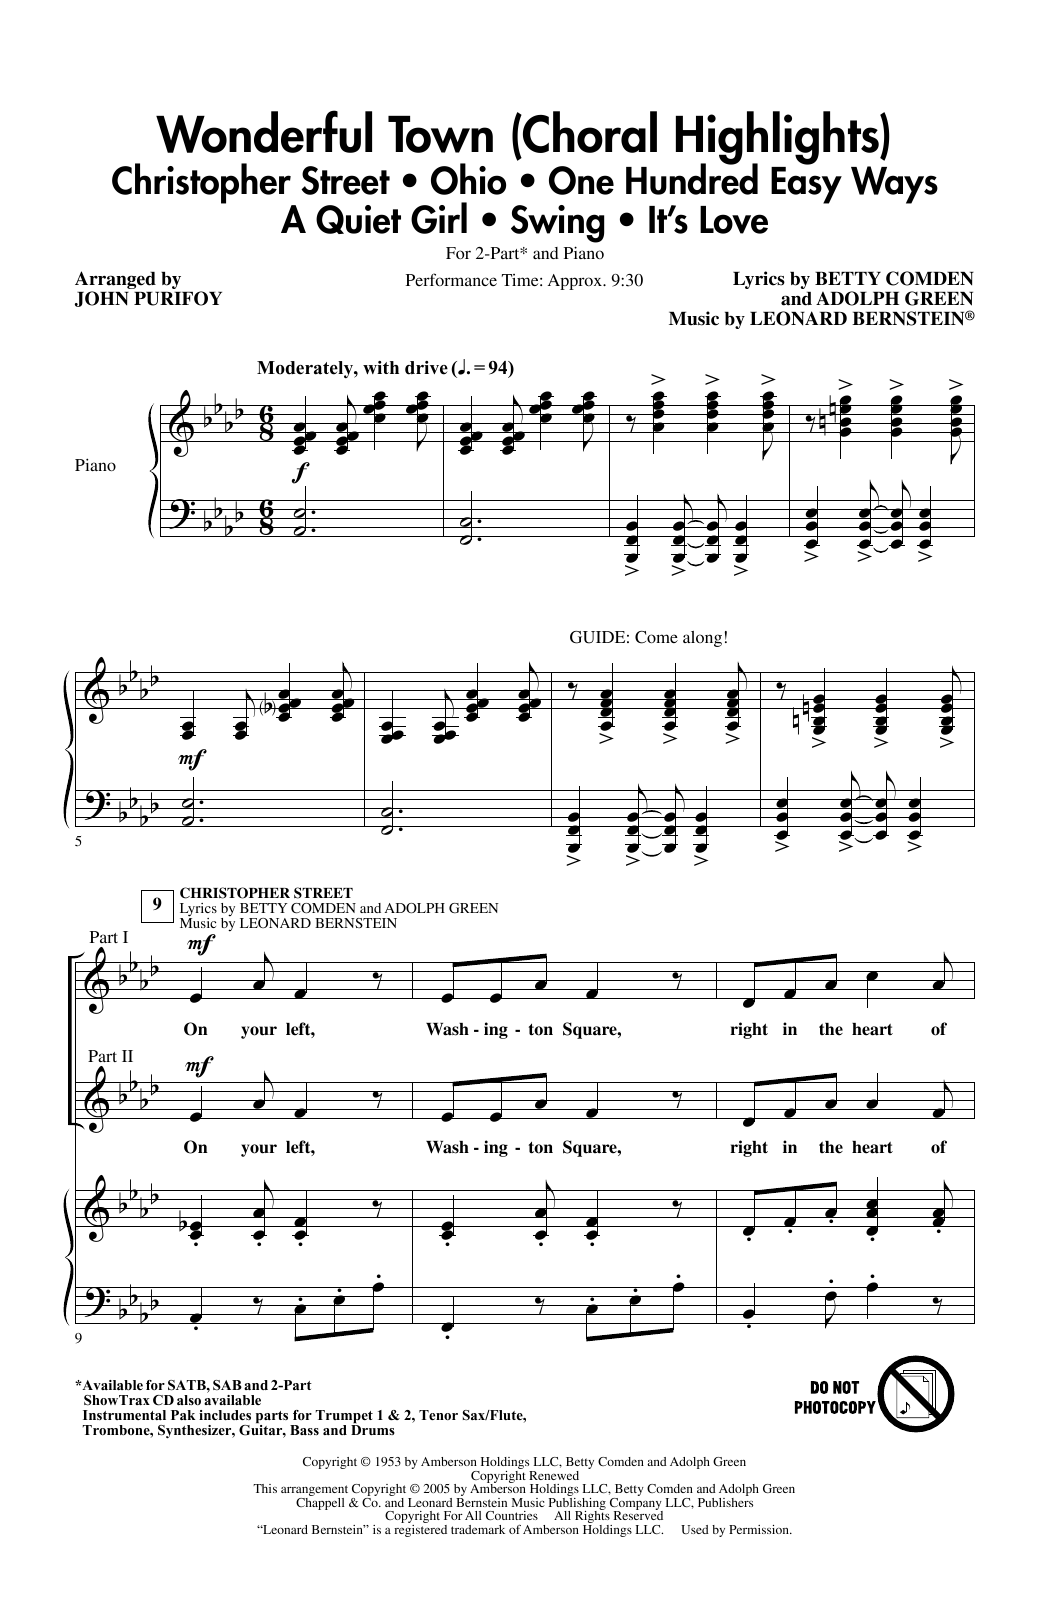 Leonard Bernstein Wonderful Town (Choral Highlights) (arr. John Purifoy) Sheet Music Notes & Chords for SAB Choir - Download or Print PDF